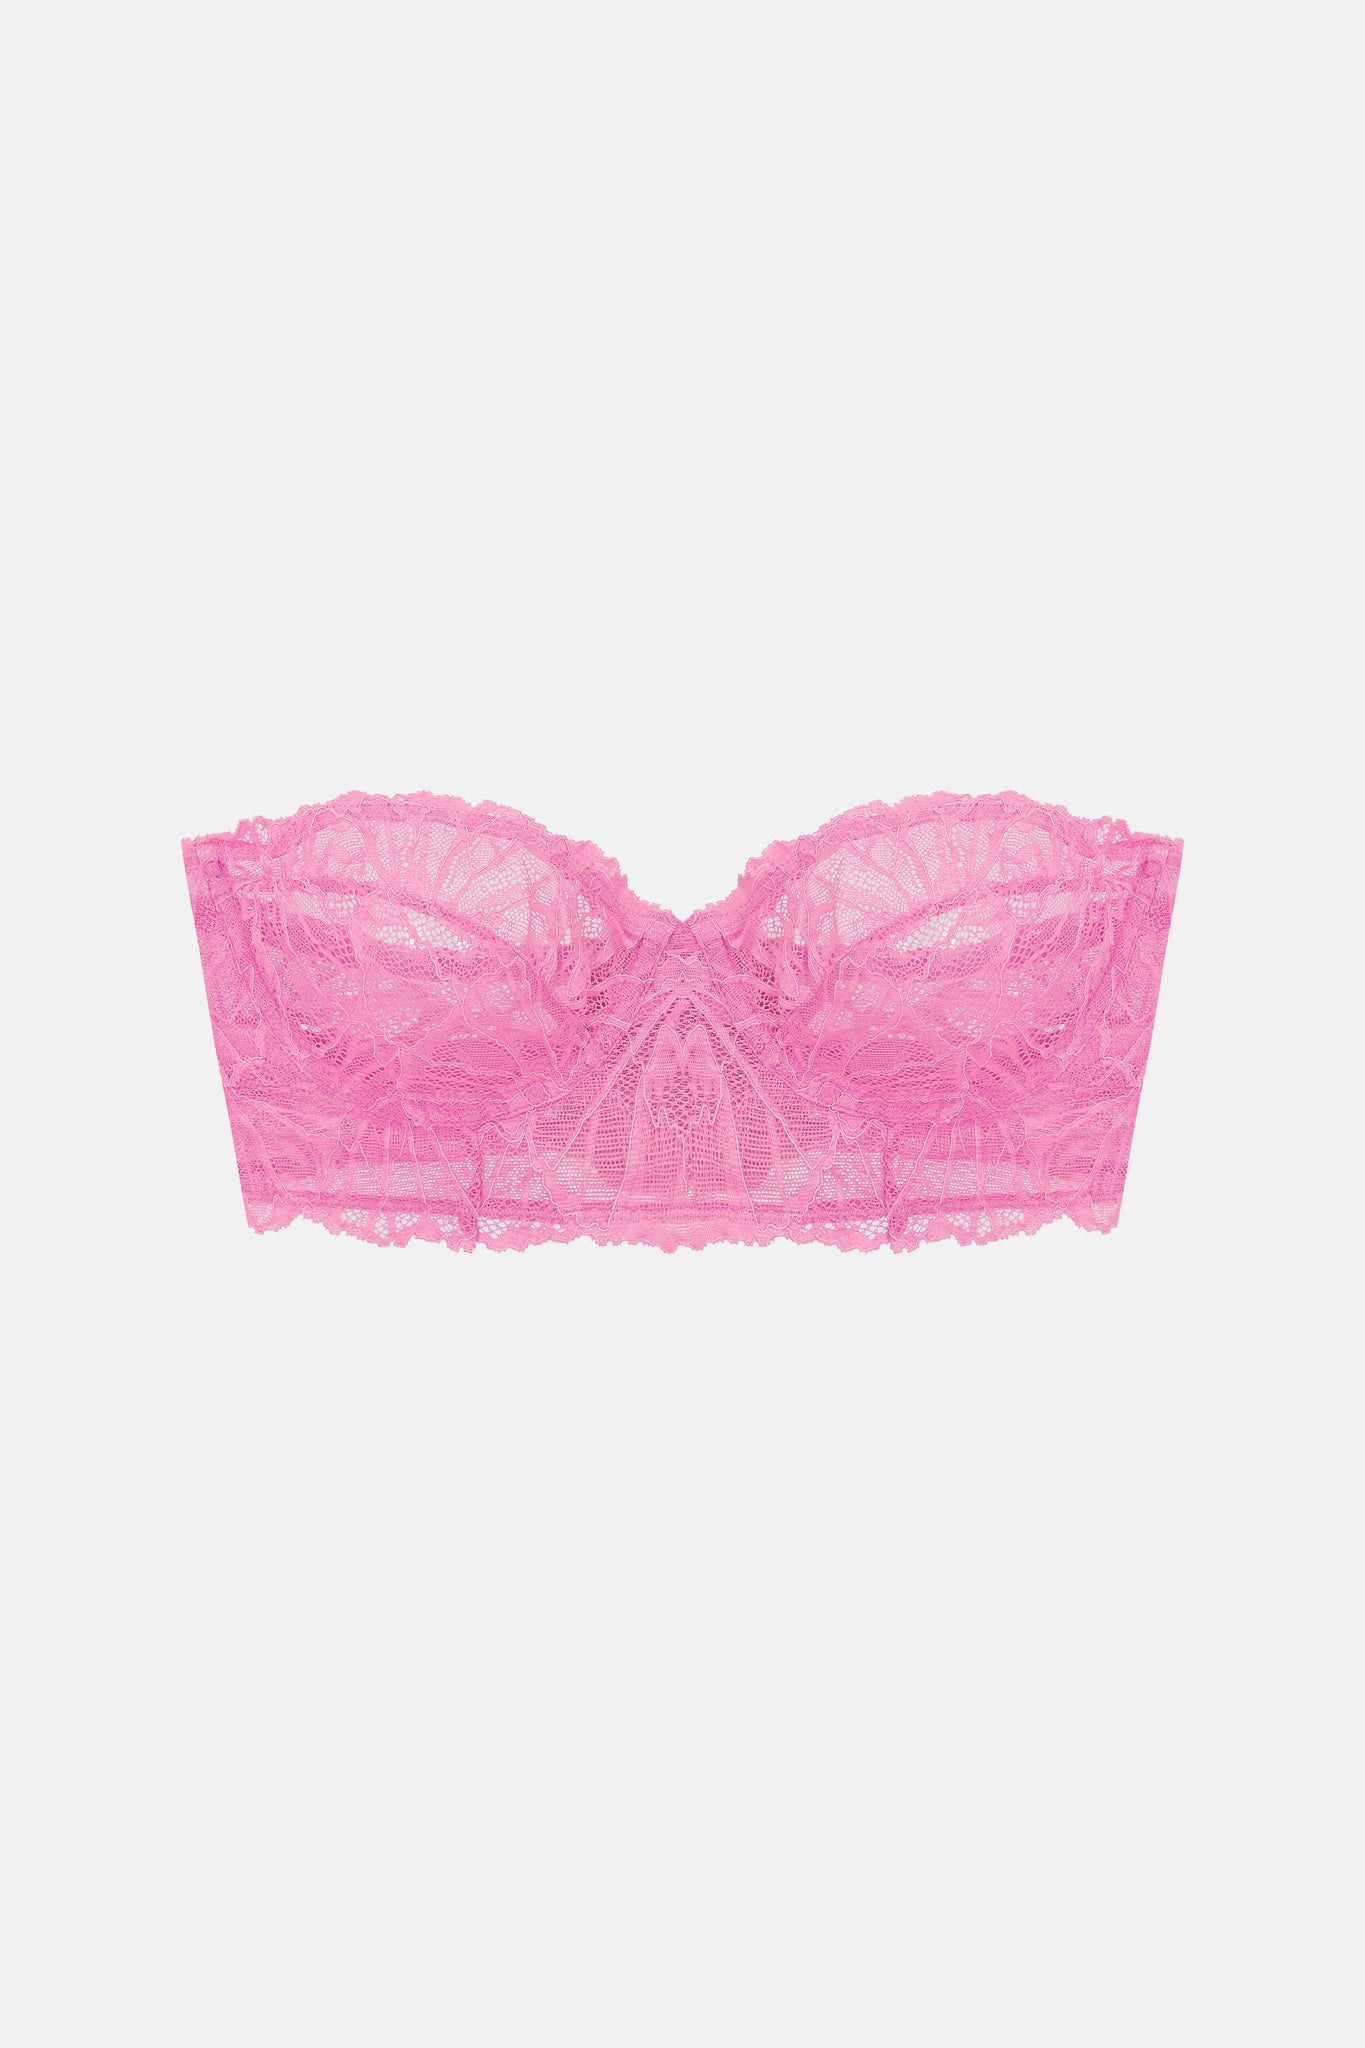 PINK Victoria's Secret, Intimates & Sleepwear, Vs Pink Lace Bandeau  Bralette